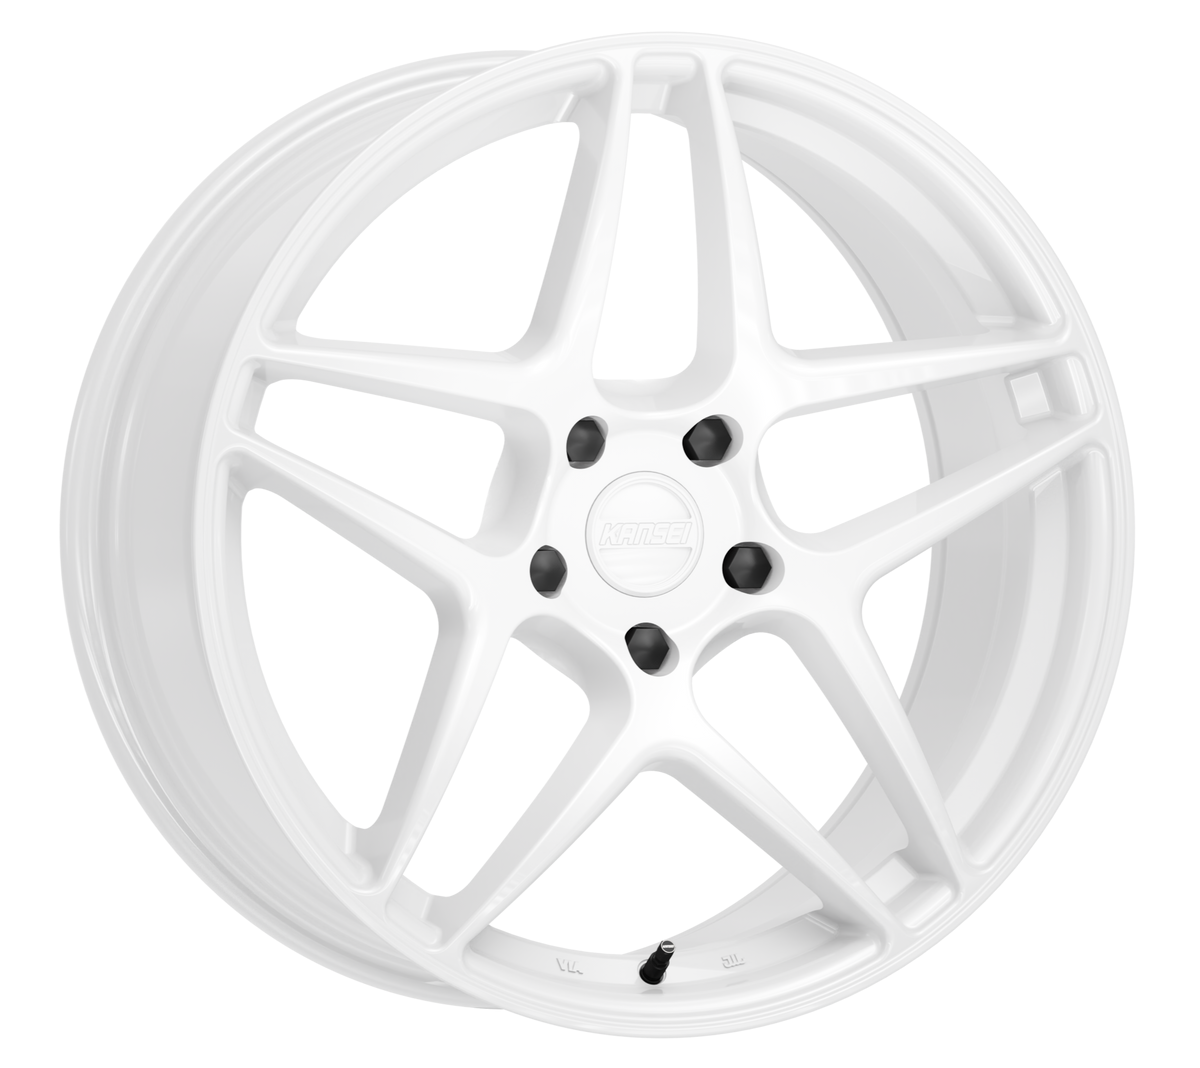 K15W ASTRO Wheel, Size: 19" x 8.50", Bolt Pattern: 5 x 112 mm, Backspace: 6.13" [Finish: Gloss White]